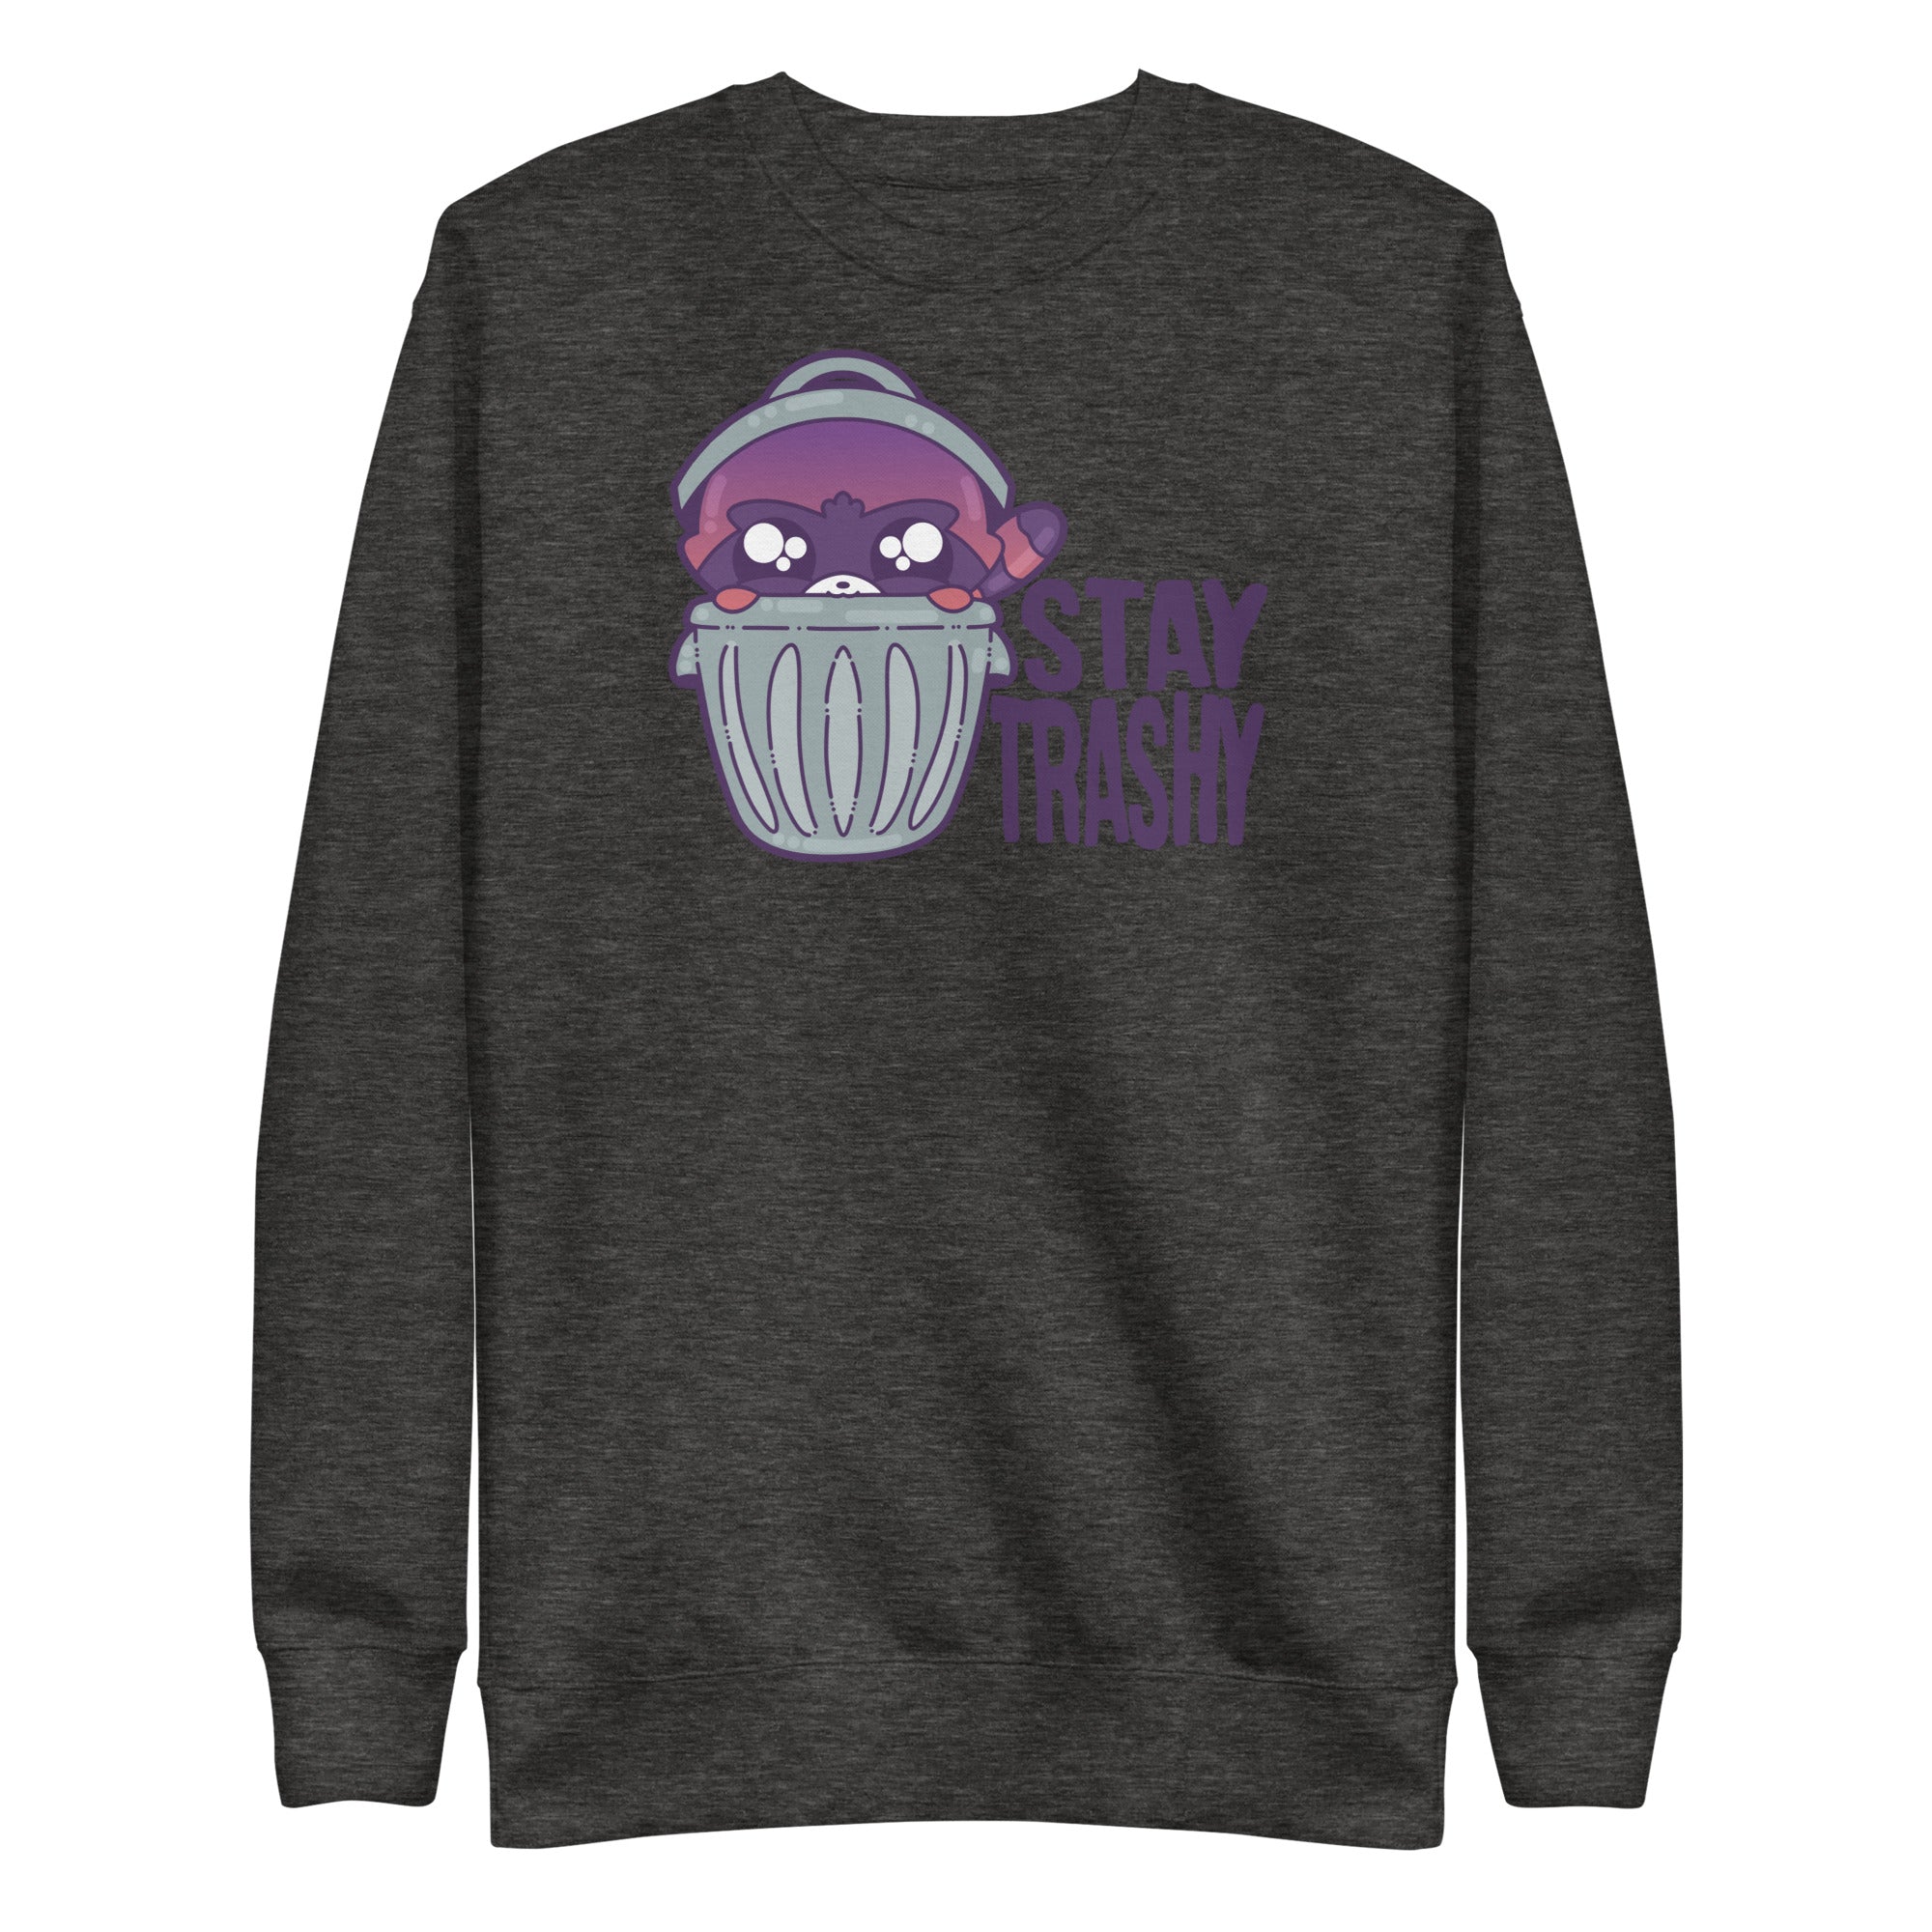 STAY TRASHY - Premium Sweatshirt